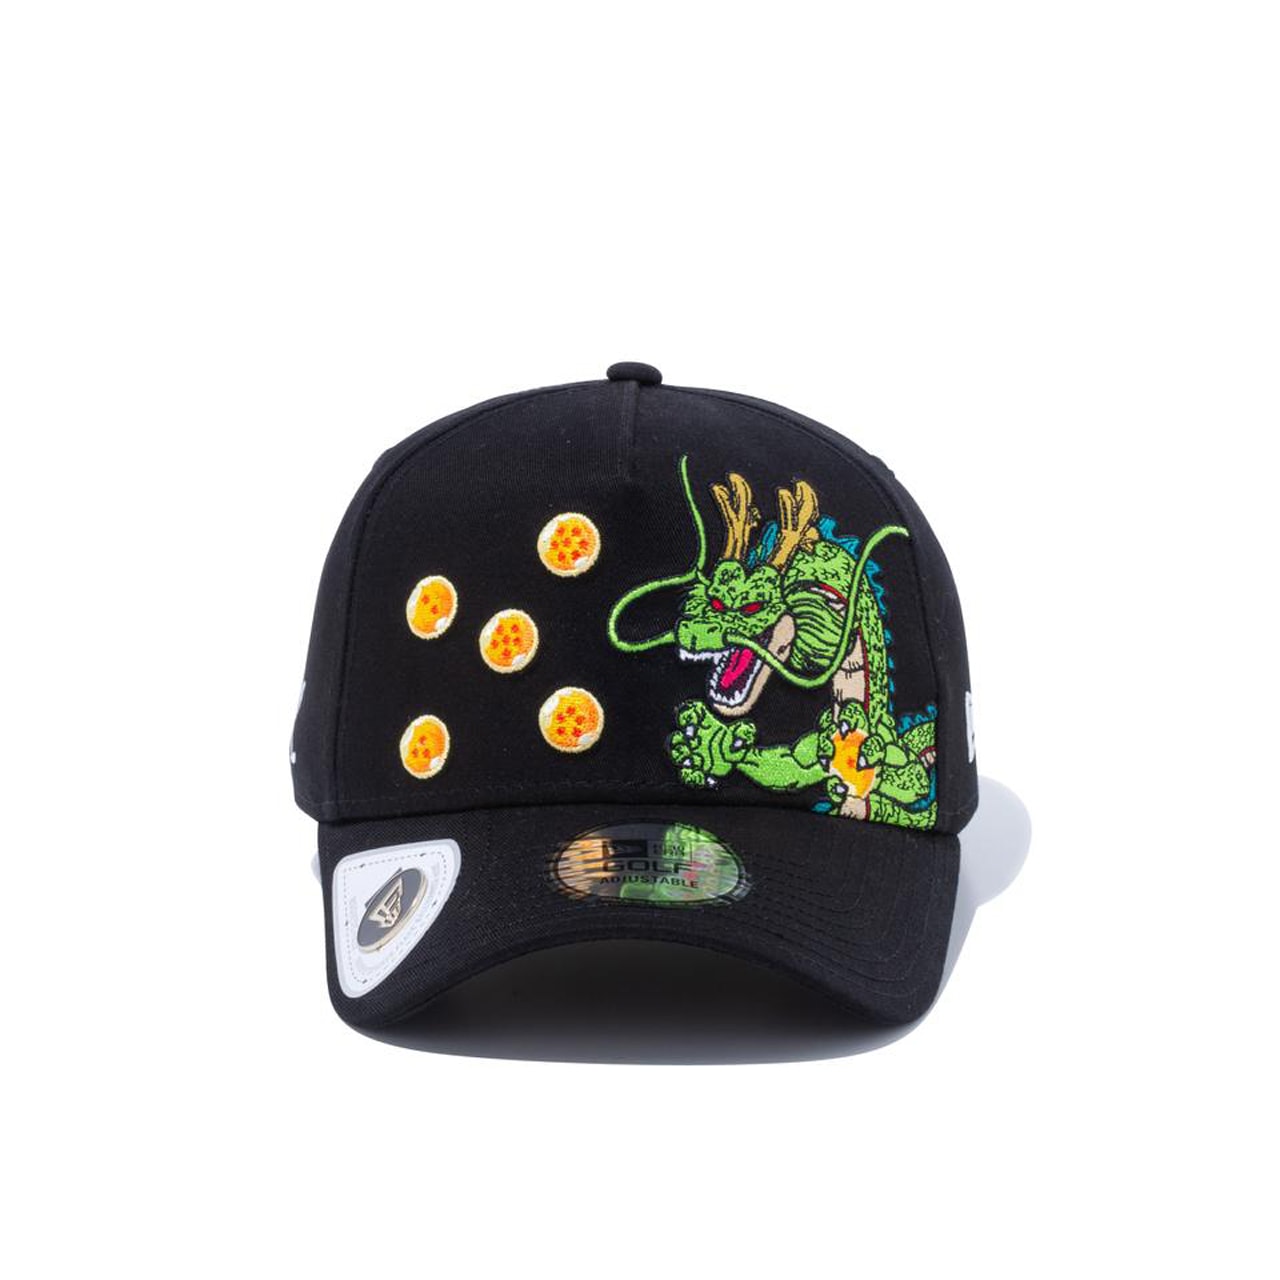 'Dragon Ball Z' x New Era Golf Headwear Collaboration collection 59 fifty visor sweat goku porunga shenron